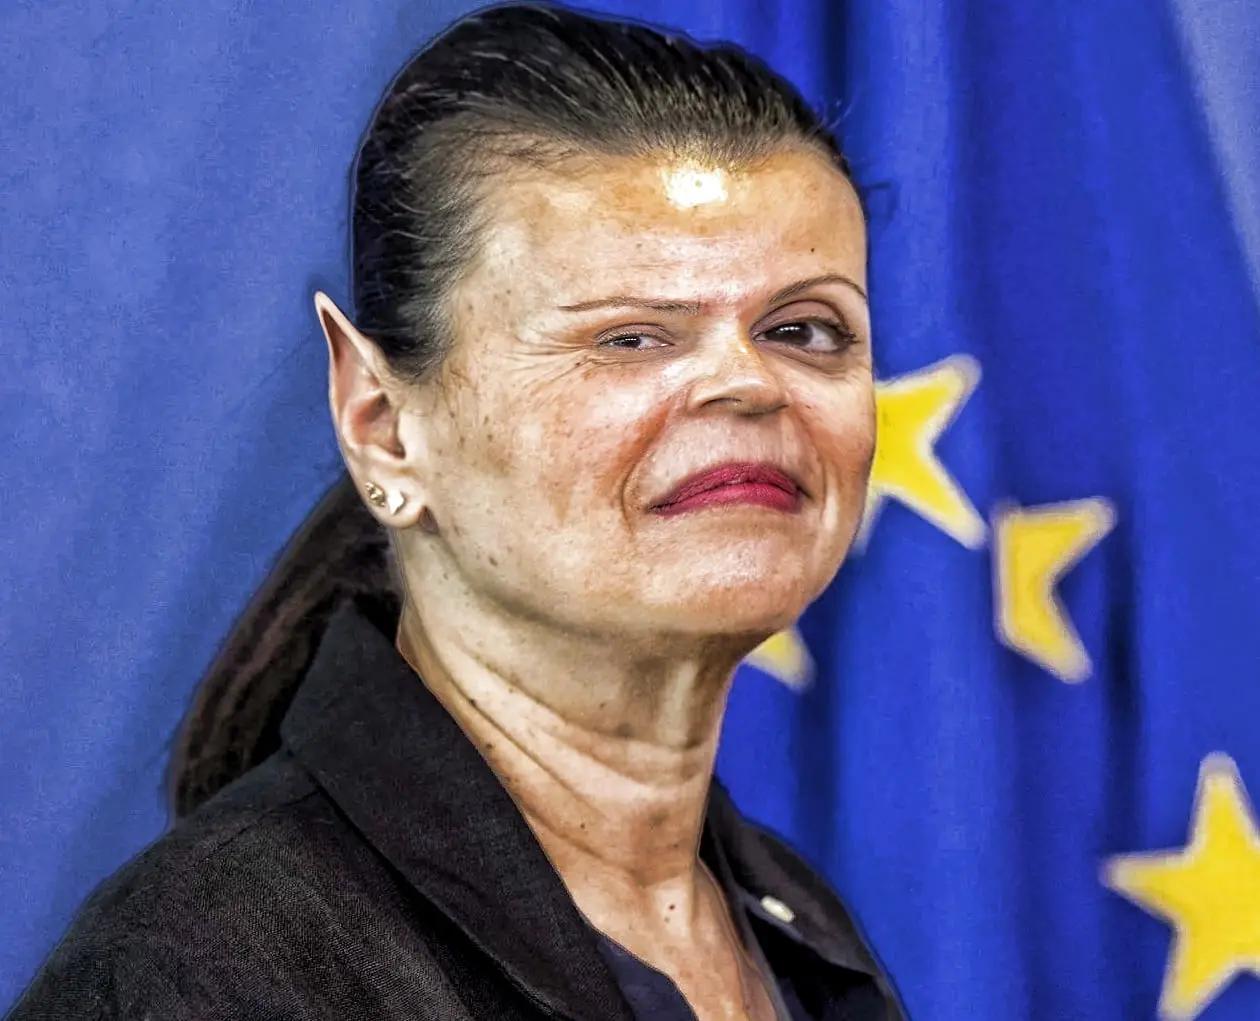 Nabila Massrali Sprecherin EU Kommission fuer auswaertige angelegenheiten gepimpt